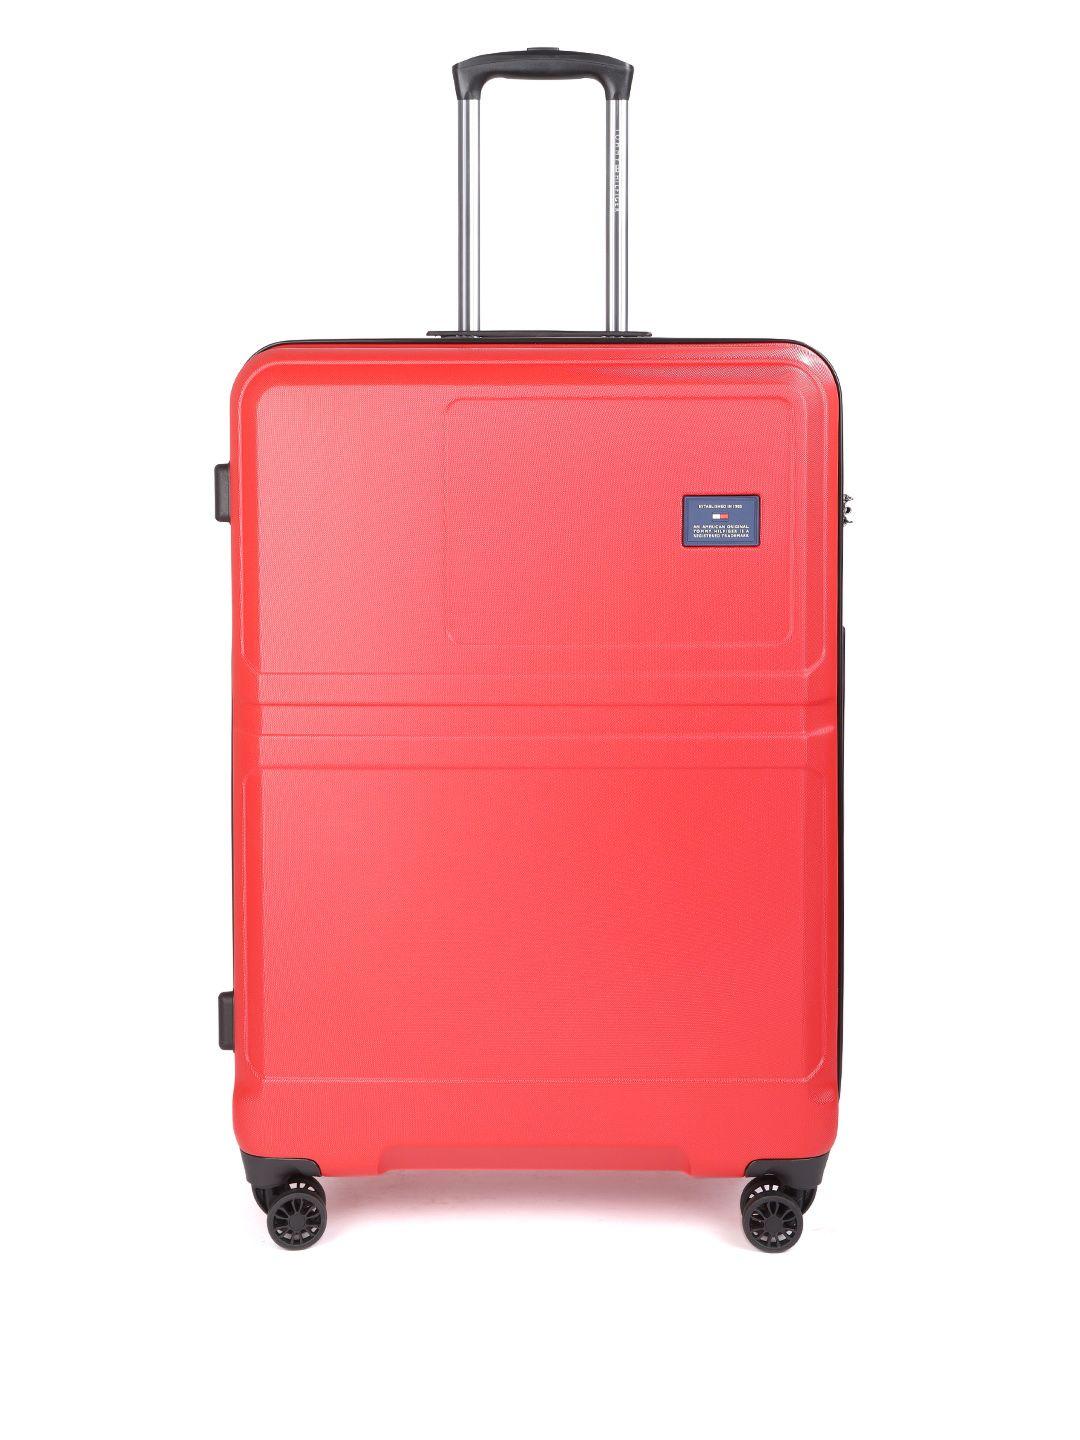 tommy hilfiger unisex red hard luggage 360-degree skate 4-wheel large trolley suitcase